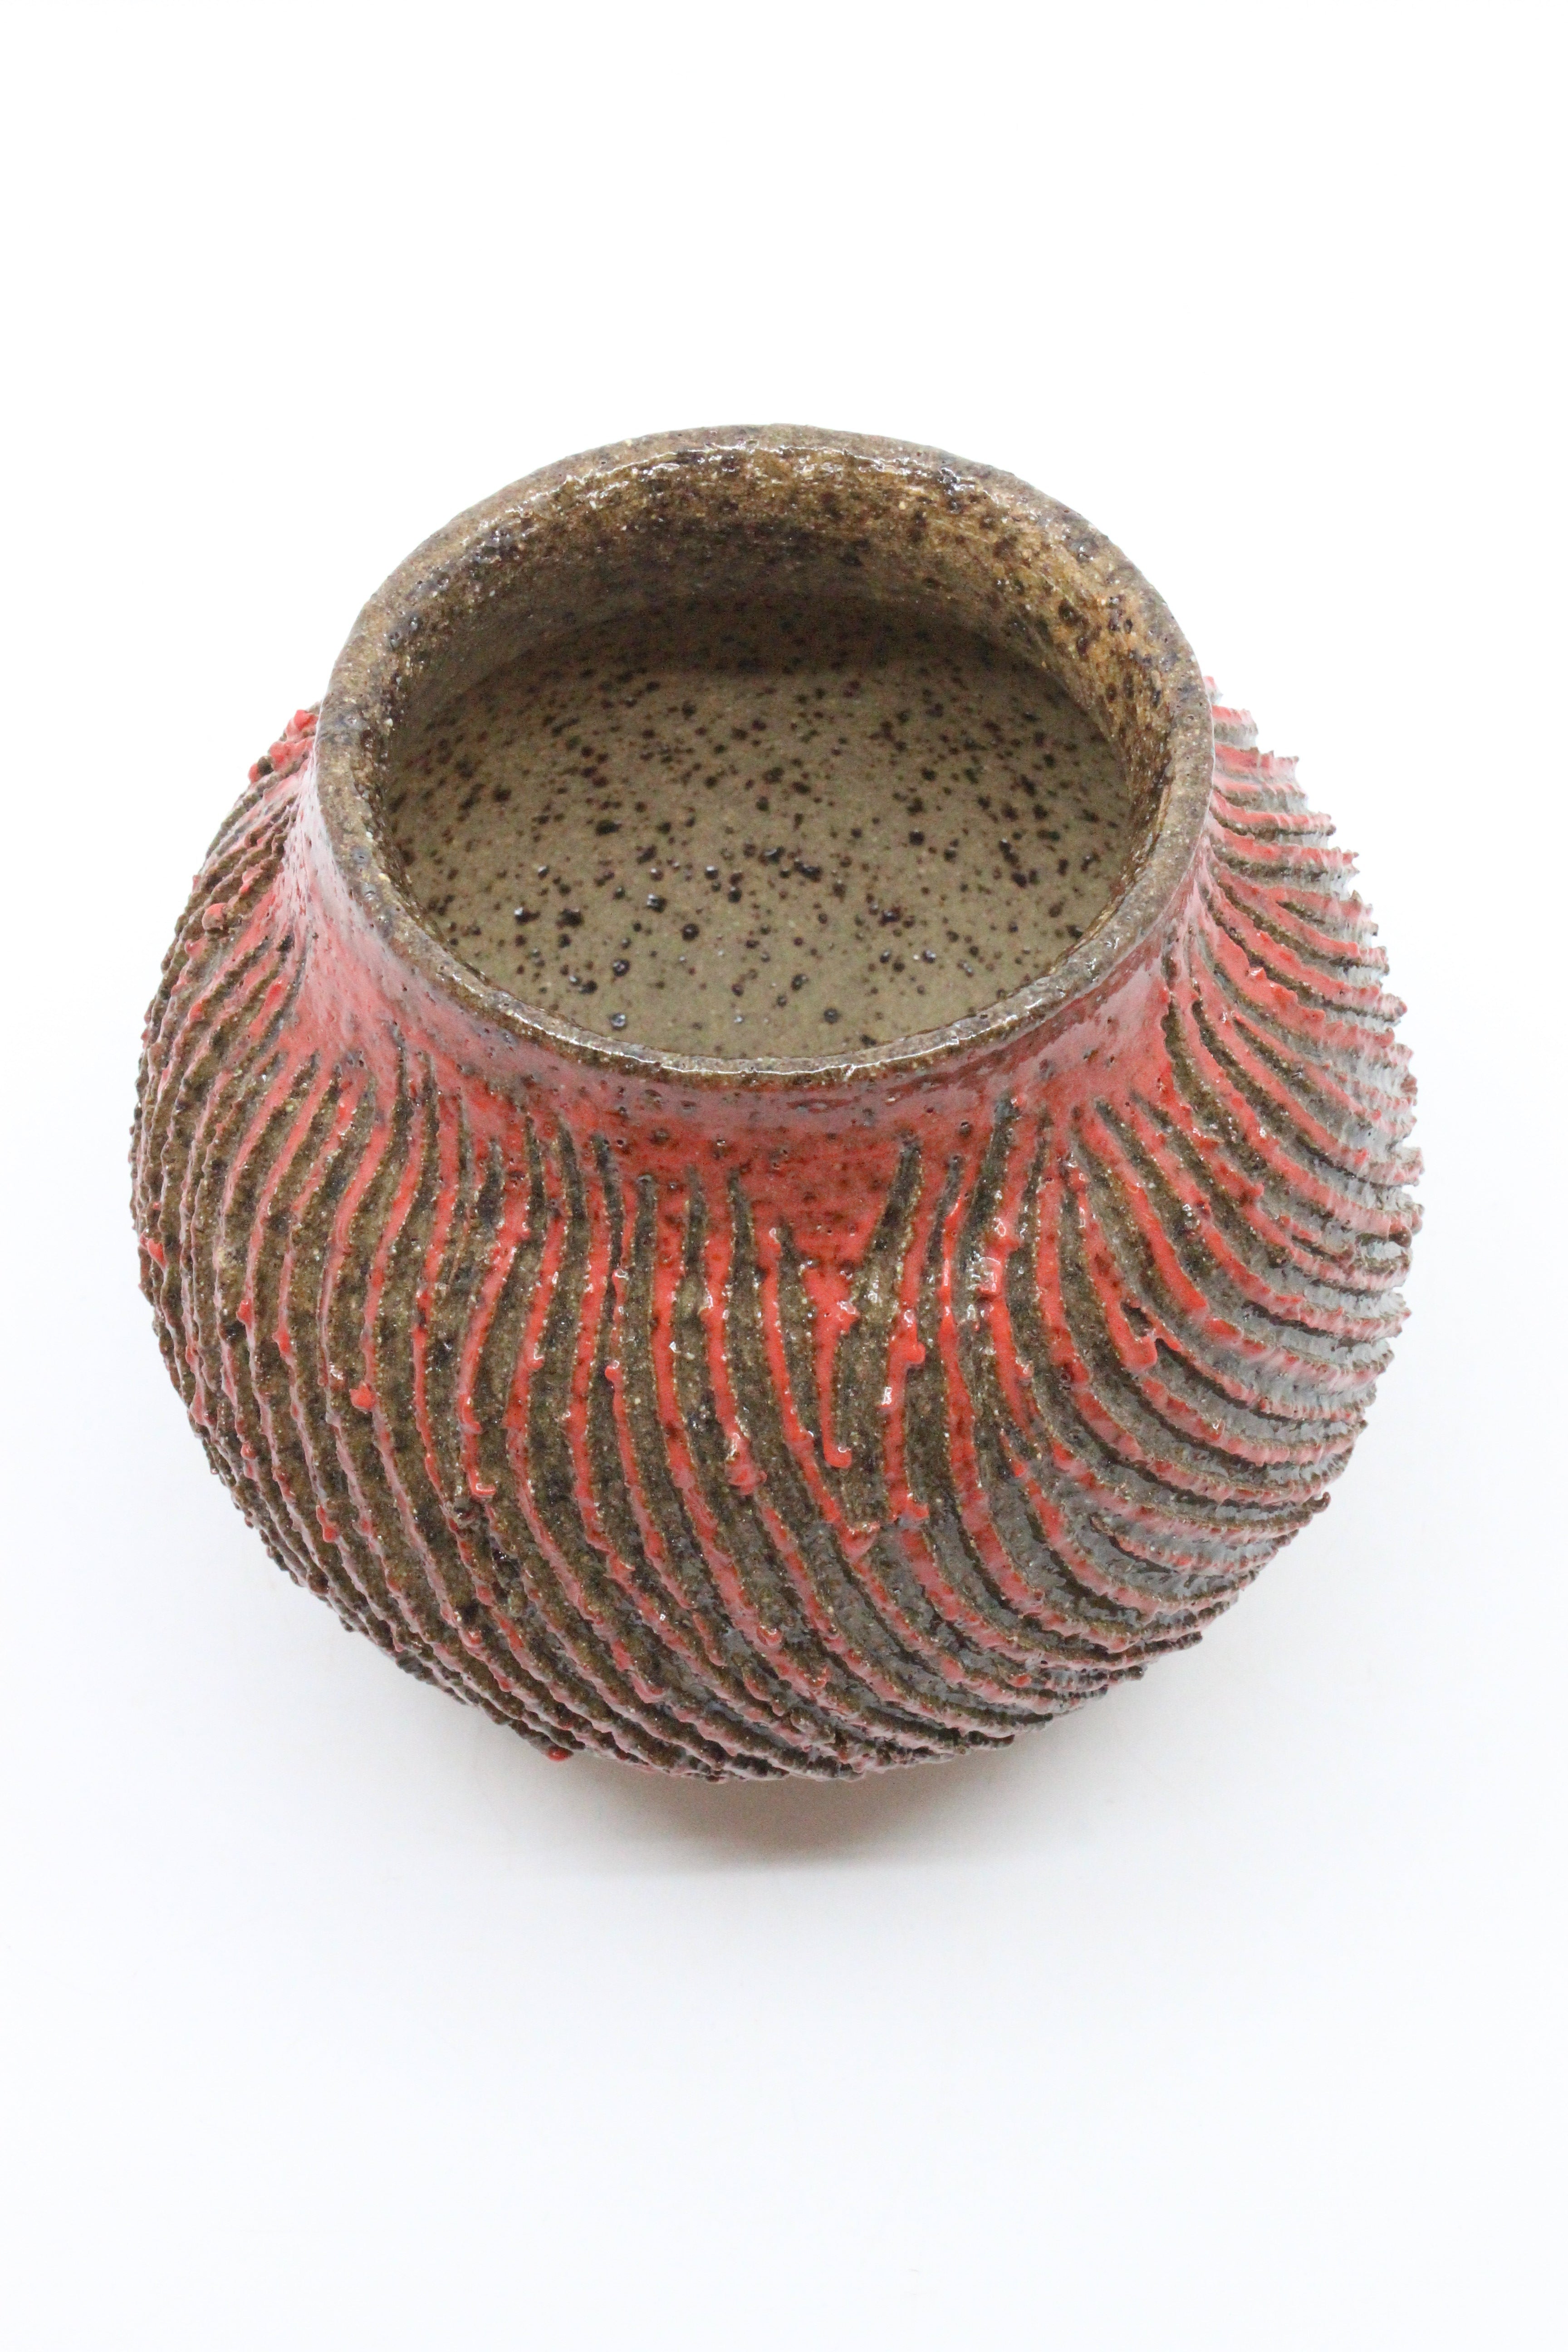 Textured Twist Vase - Medium